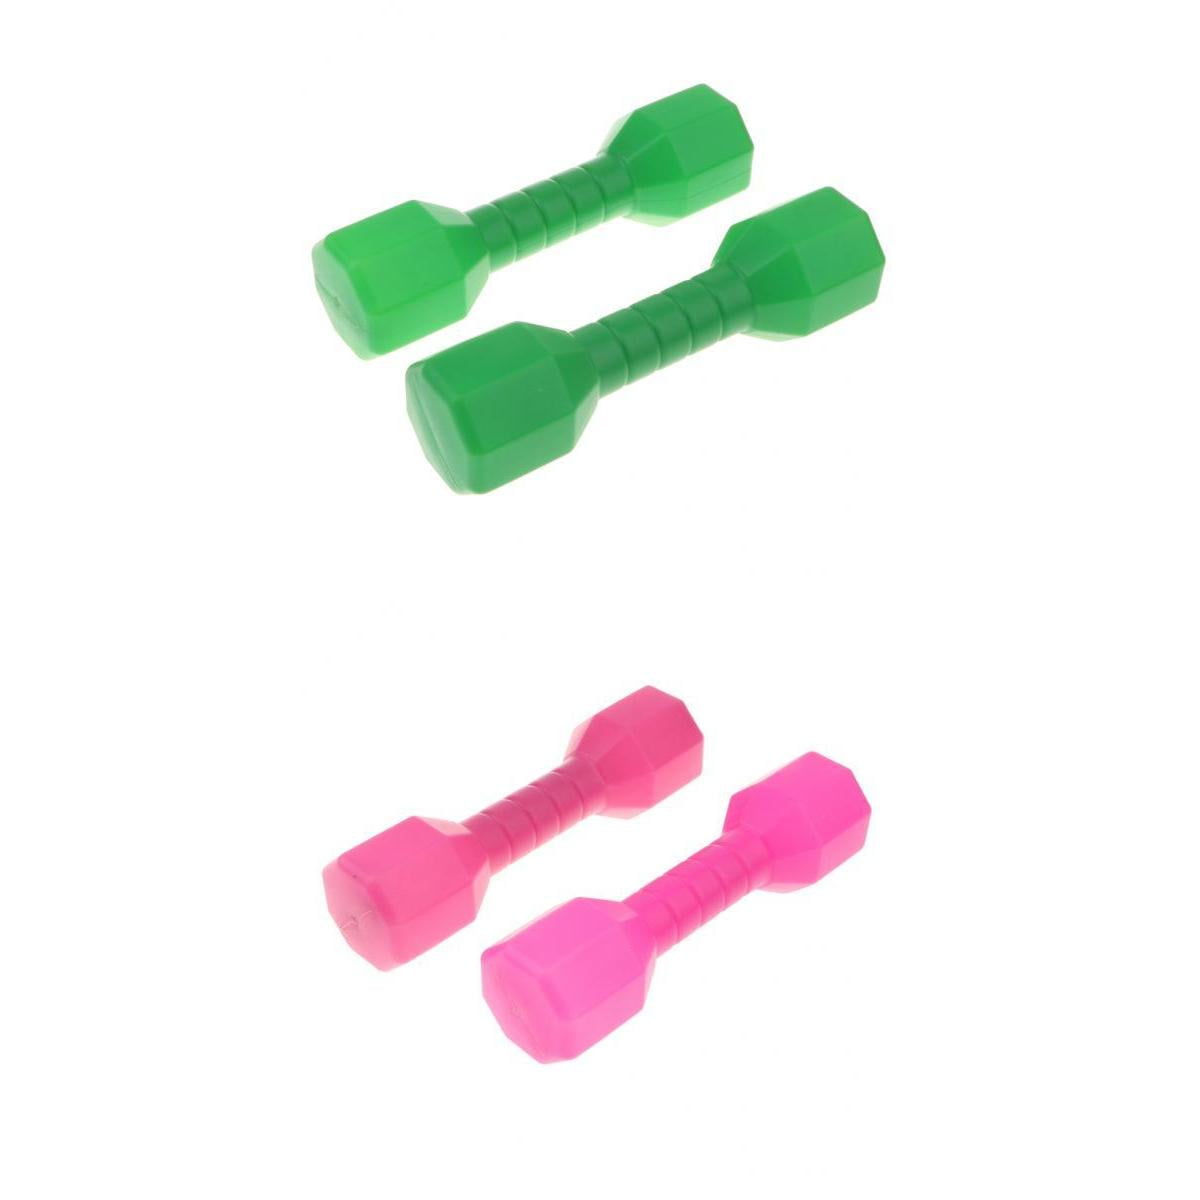 4 pcs Kids Plastic Dumbbells Sports Exercise Toys Green & Pink 